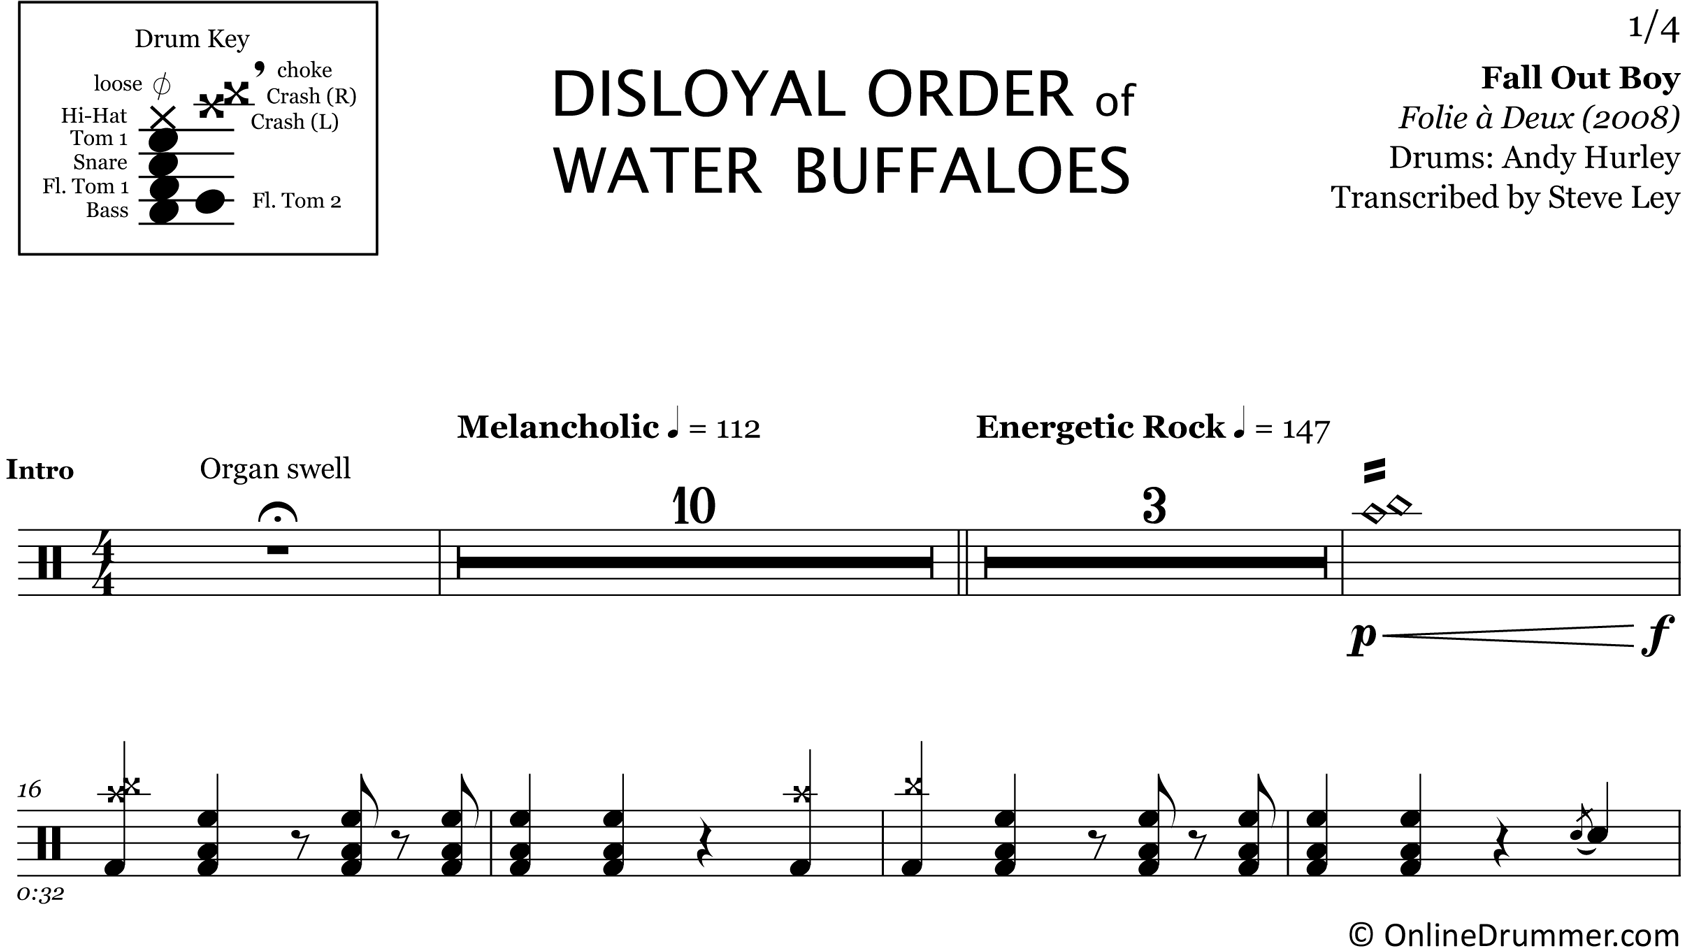 Disloyal Order of Water Buffaloes - Fall Out Boy - Drum Sheet Music